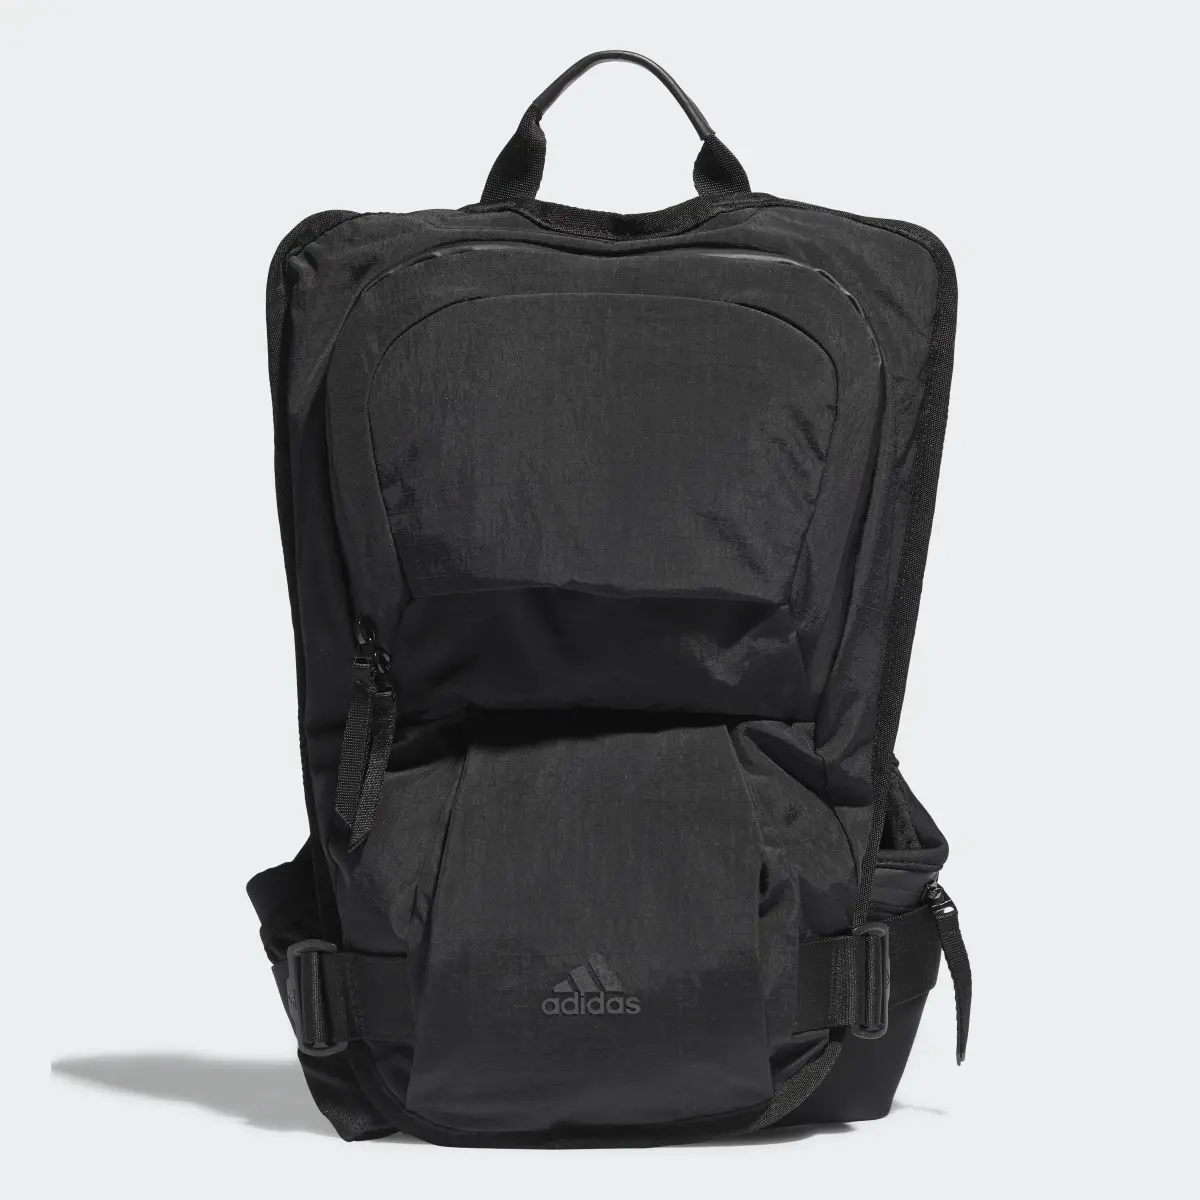 Adidas X-City Hybrid Bag. 2